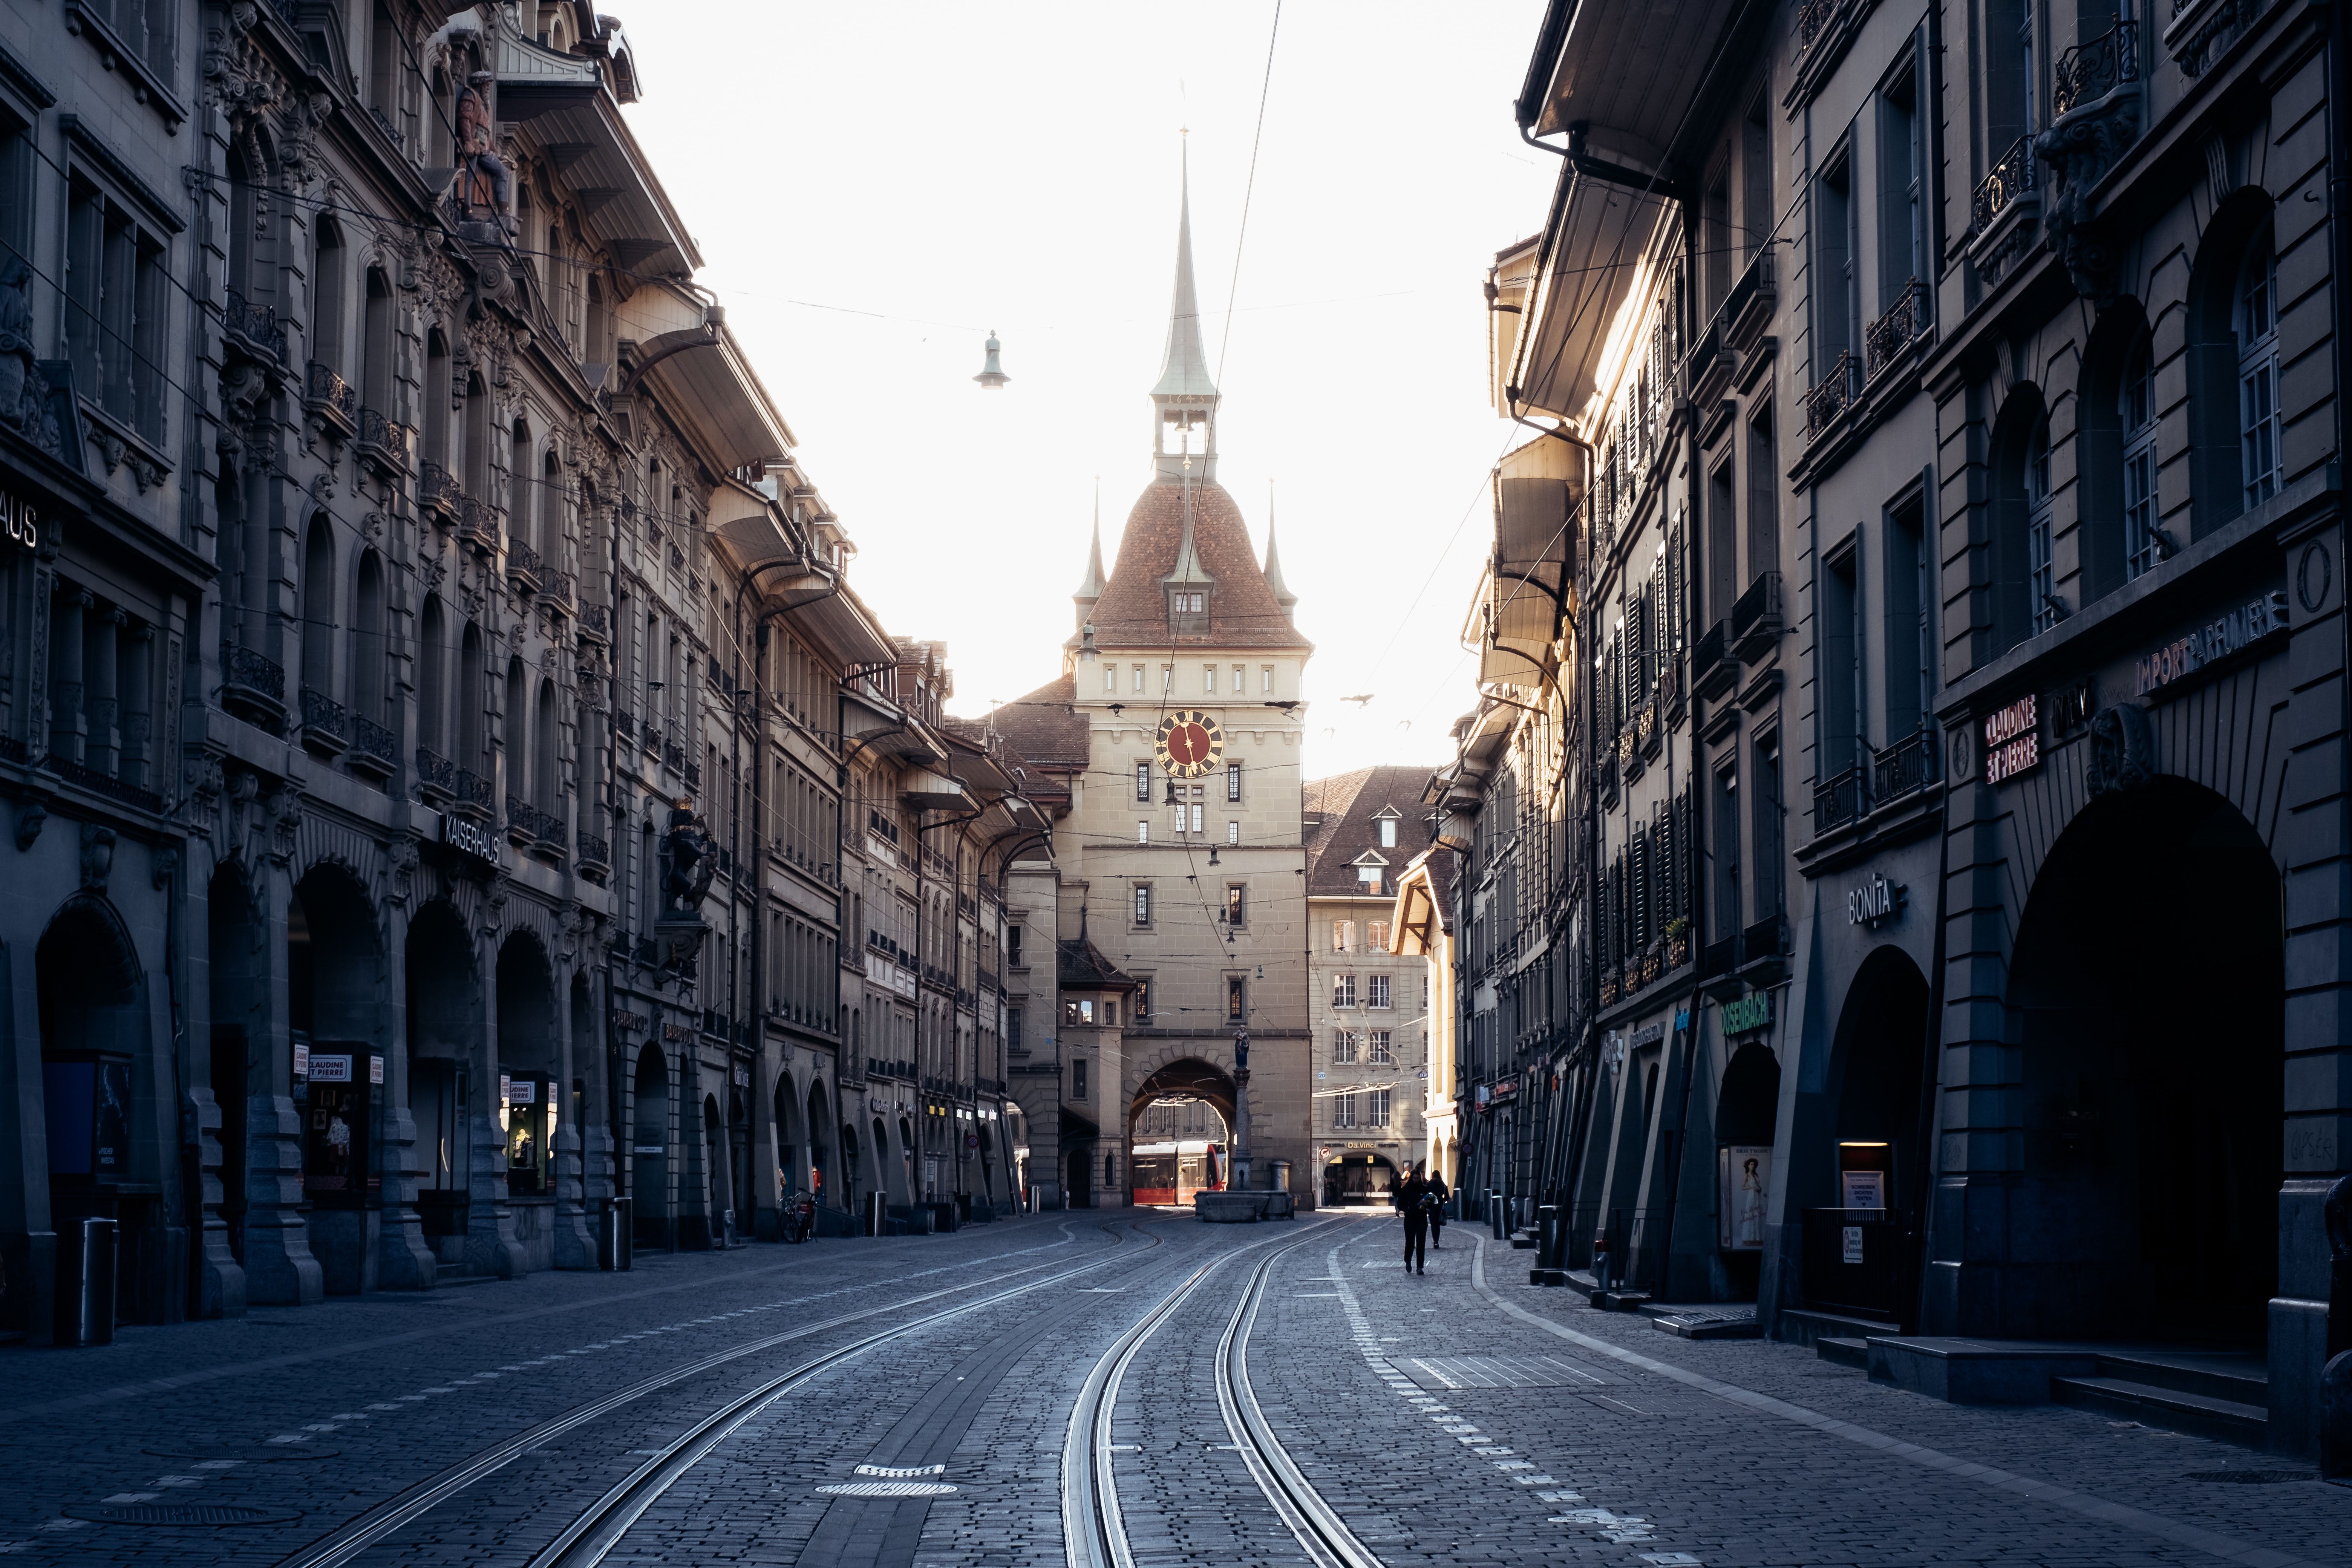 Photo of a street scene in Switzerland